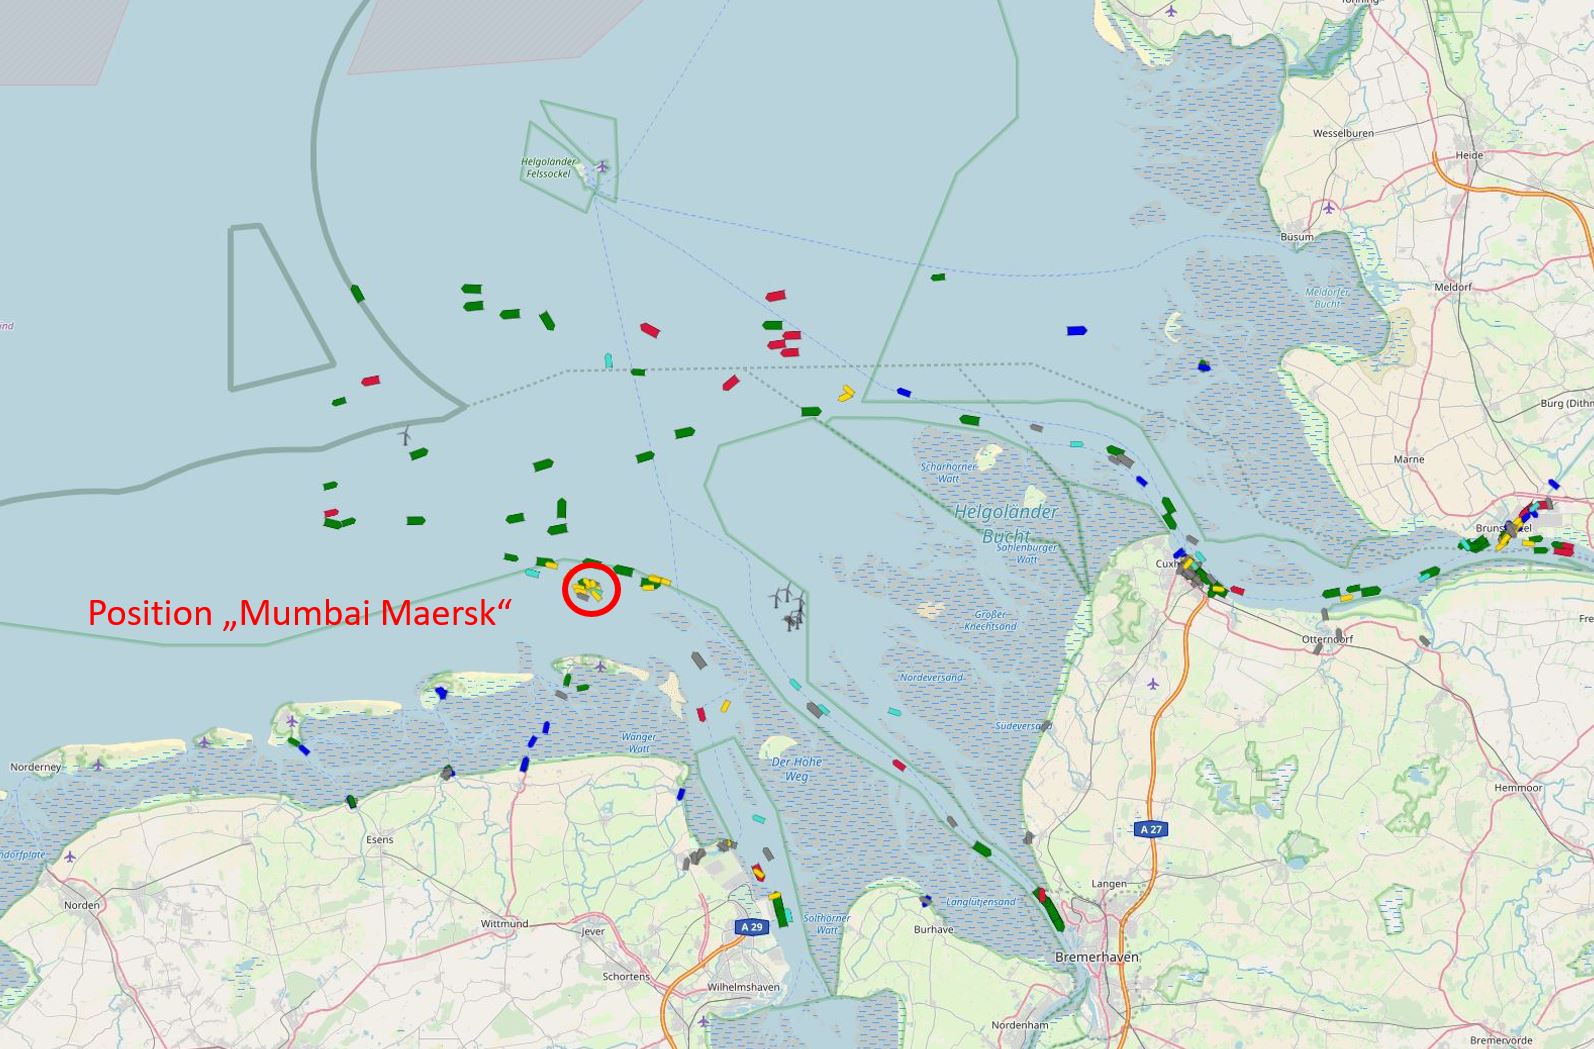 Current position of Mumbai Maersk off Wangerooge